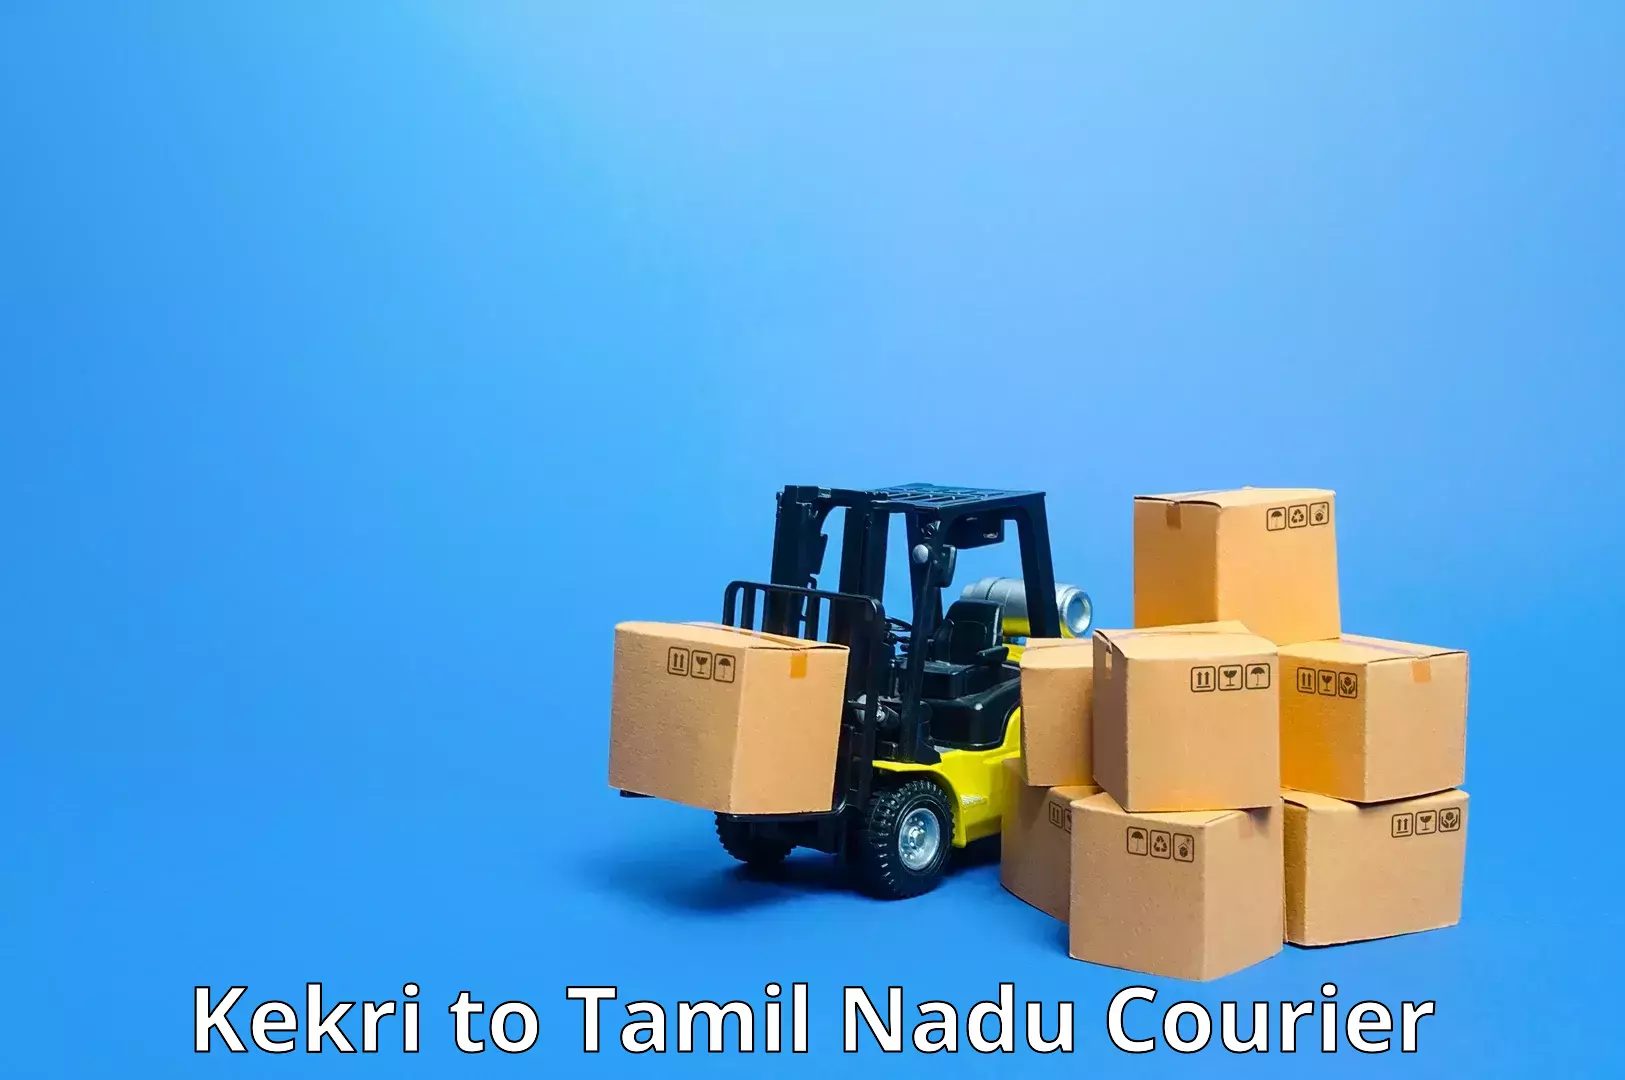 Remote area delivery in Kekri to Thiruvadanai